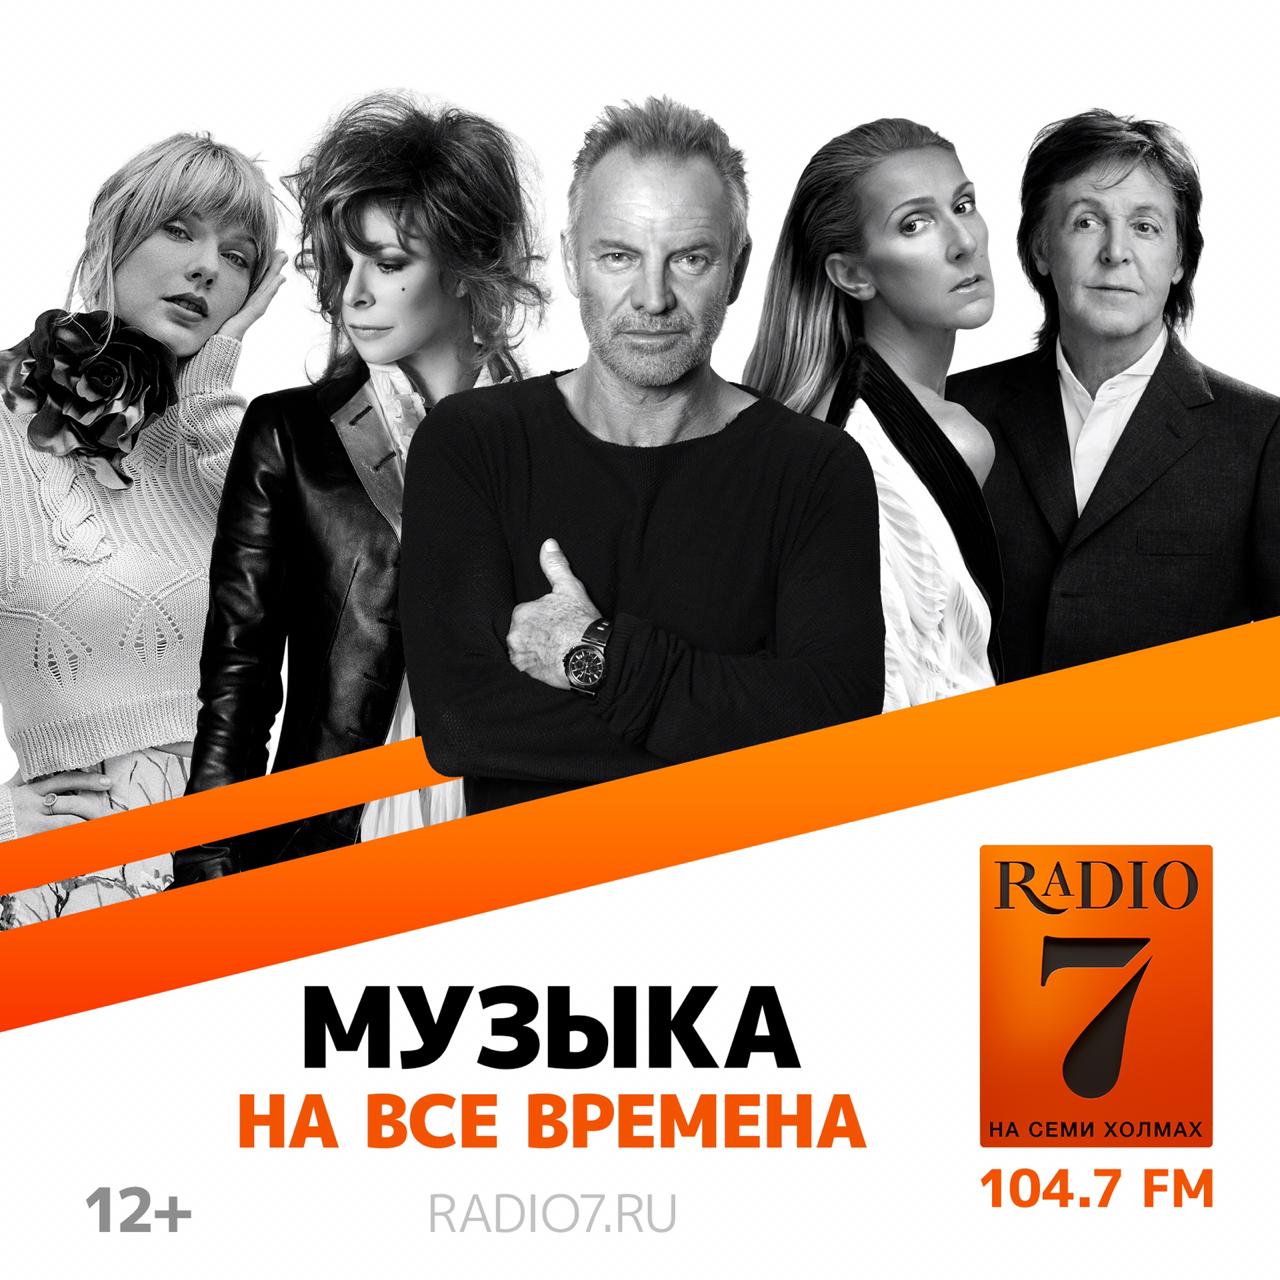 Радио семь новосибирск. Радио на семи холмах. Радио 7 на 7. Радио 7 на семи холмах Москва. Радио 7 реклама.